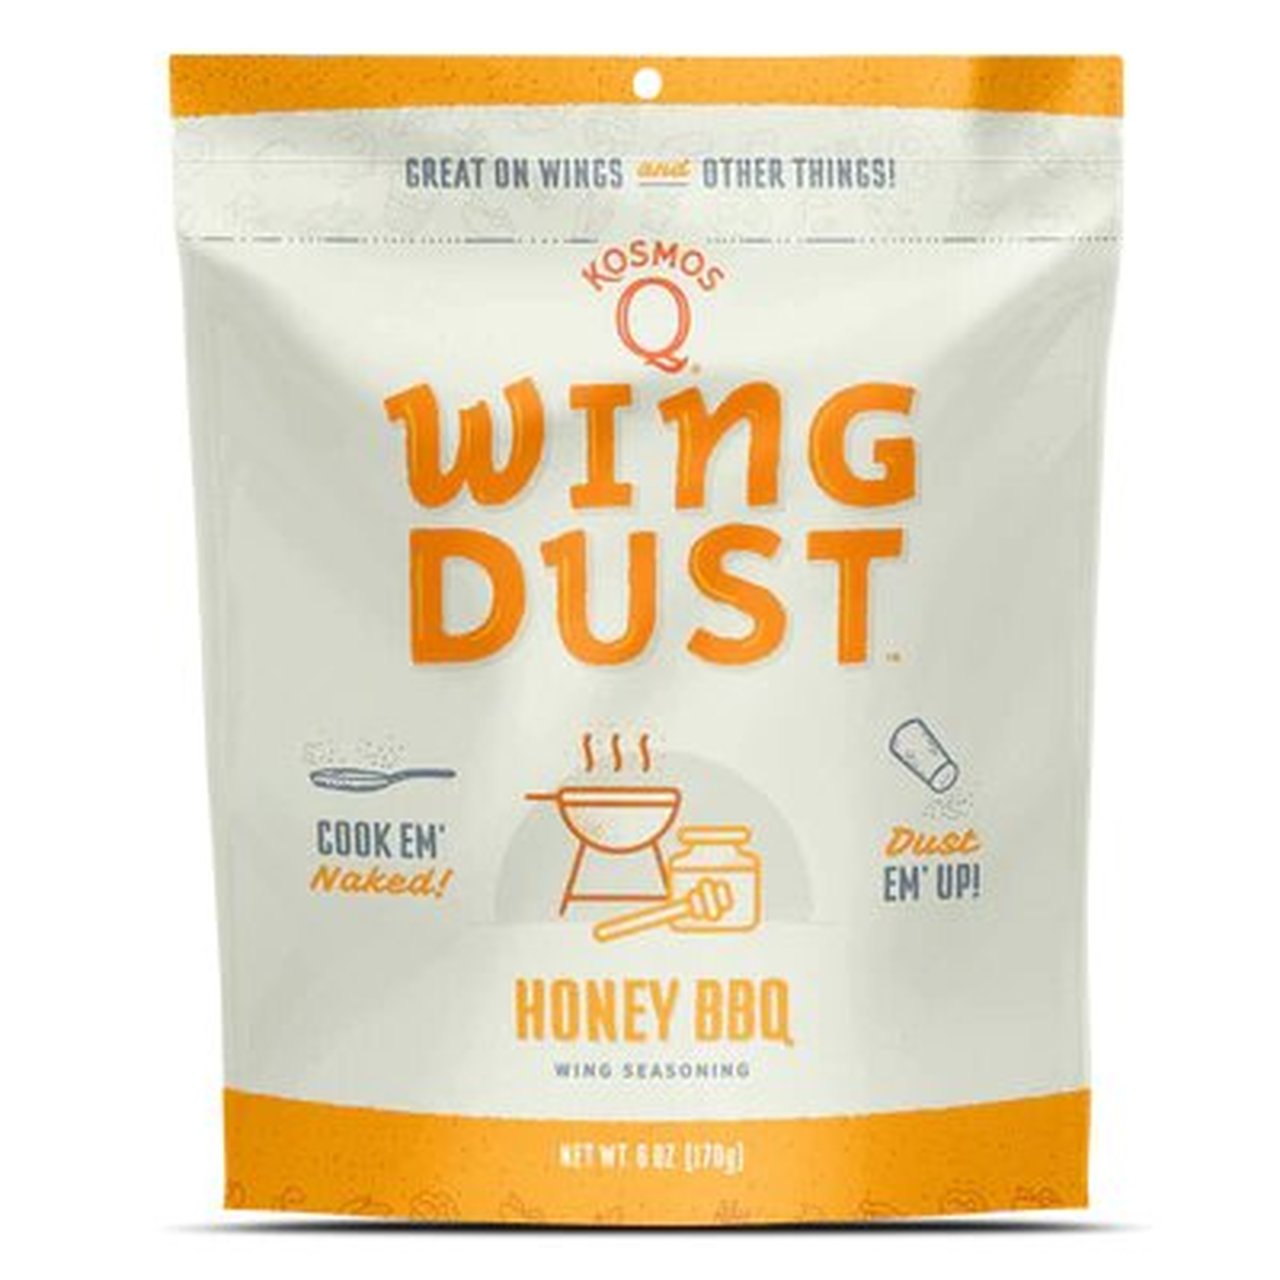 Kosmo's Q - Honey BBQ Wing Dust